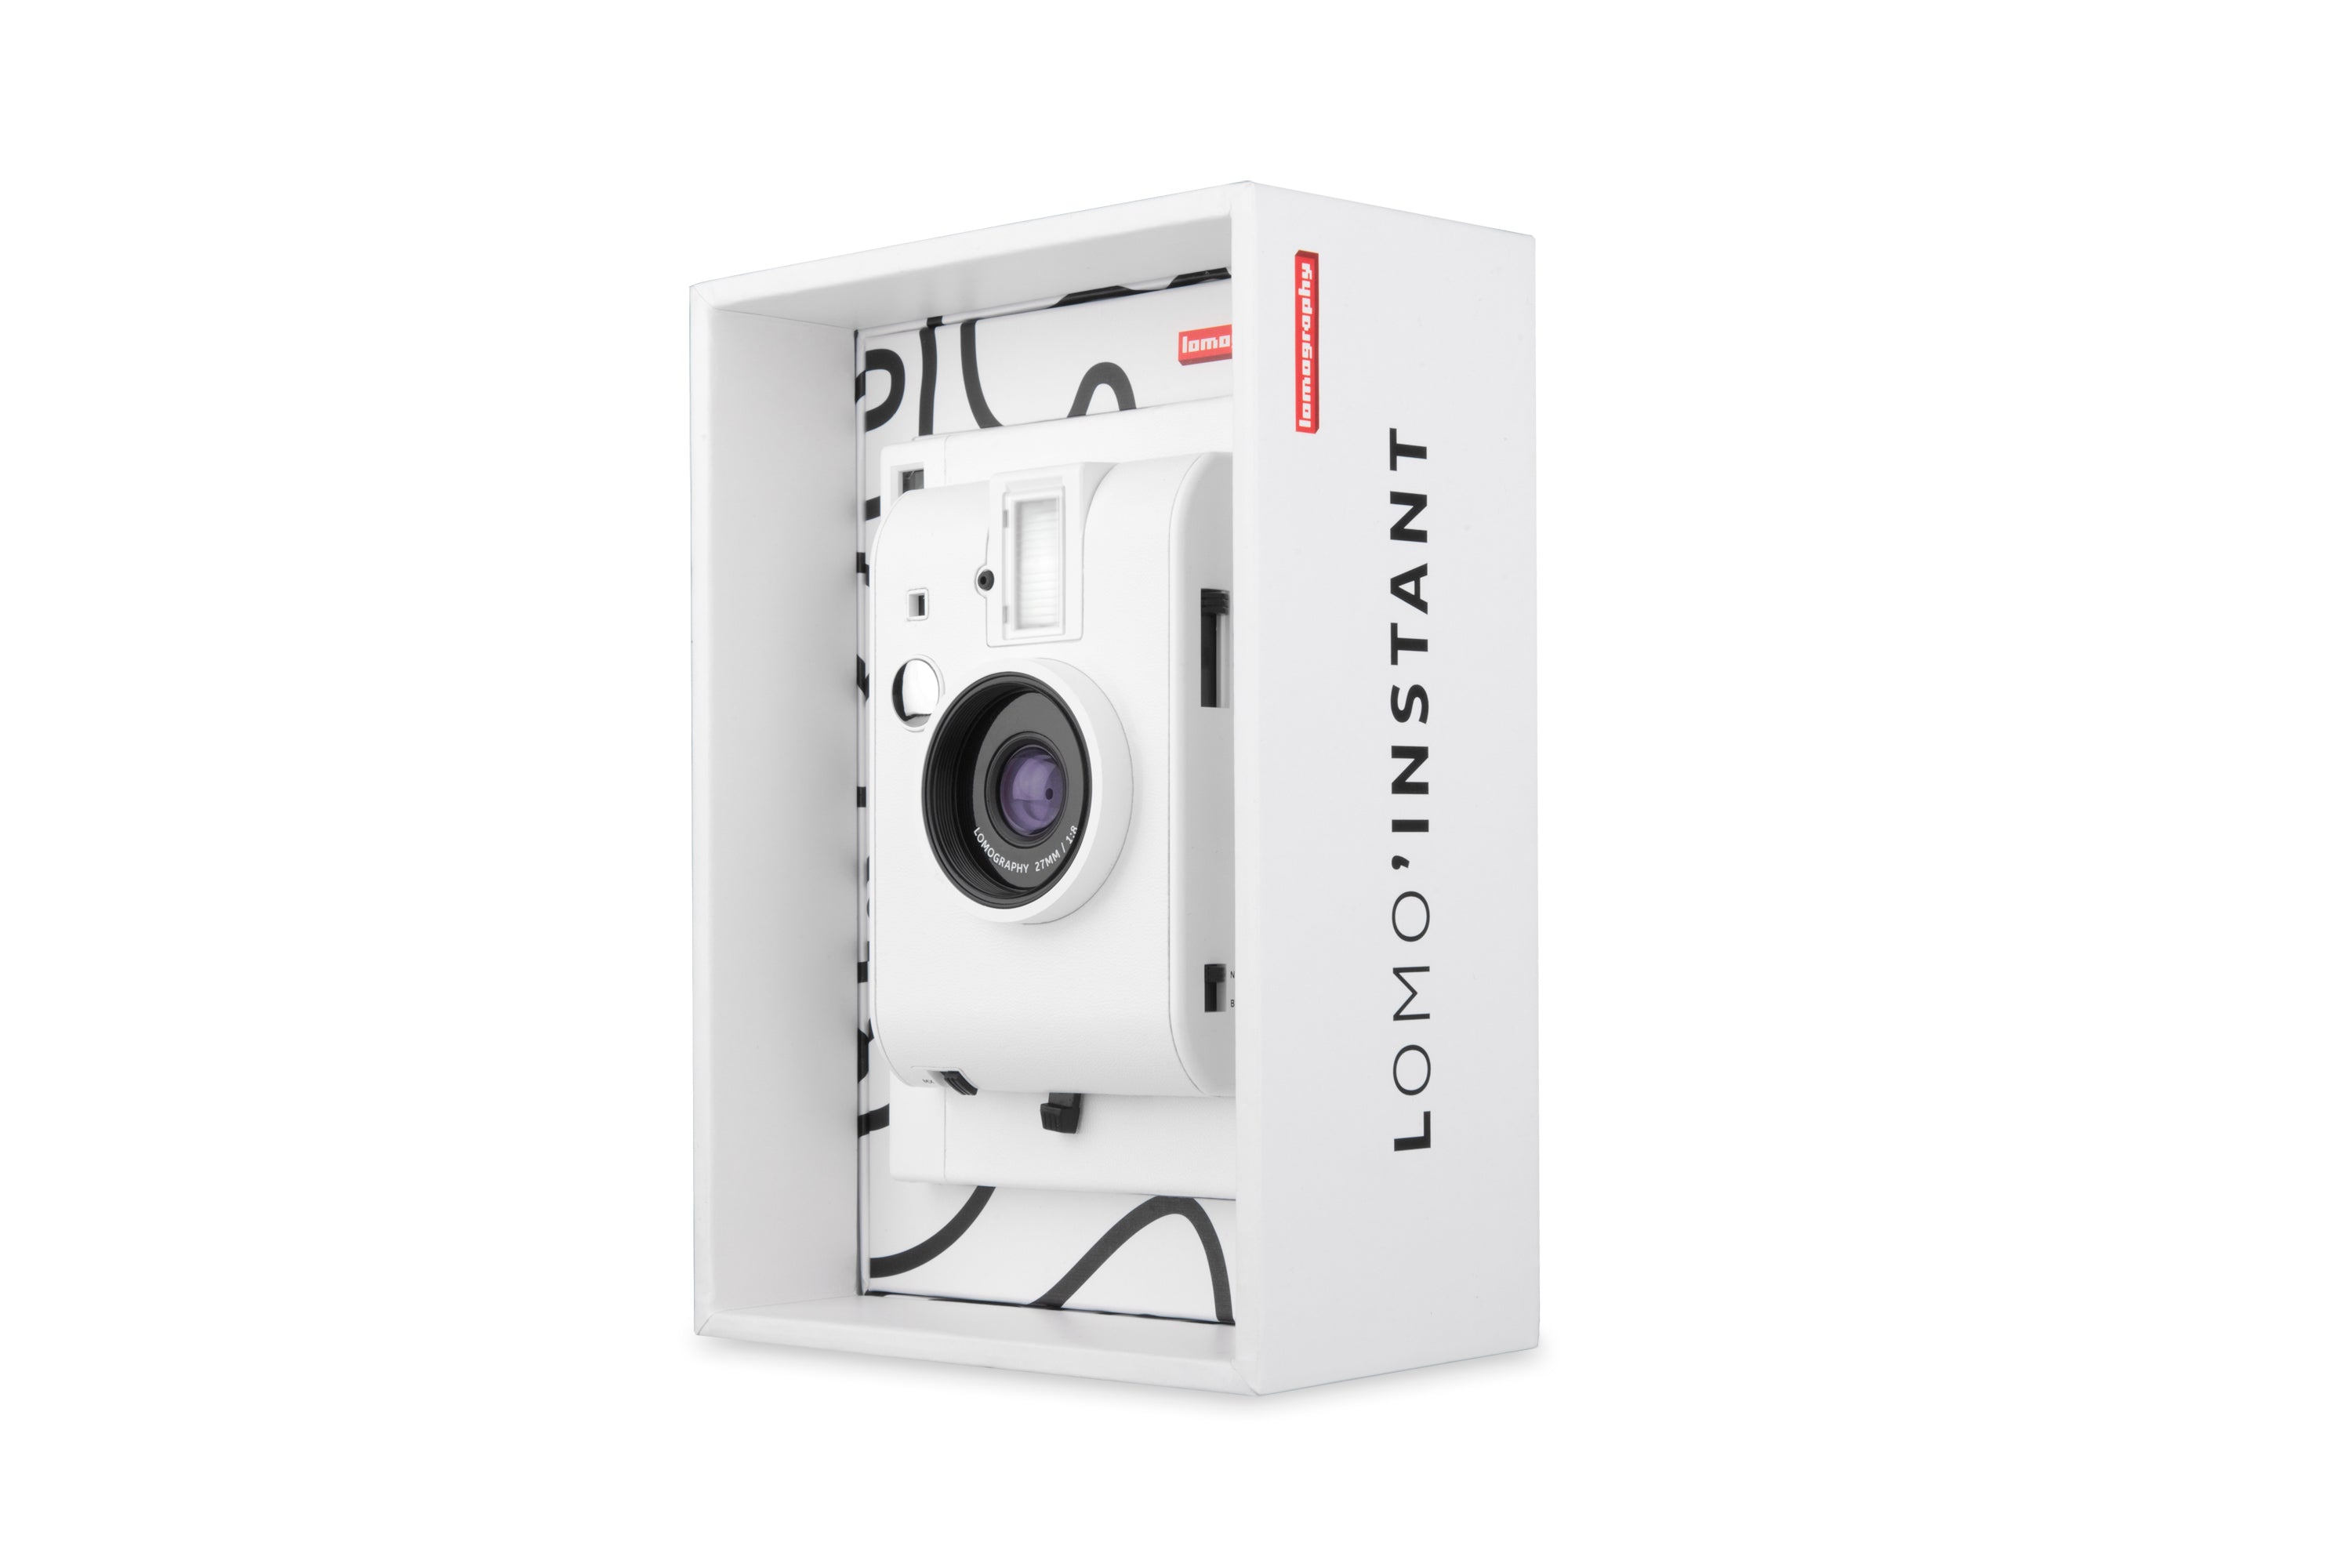 LOMOGRAPHY LOMO'Instant camera, White (Instax film camera)